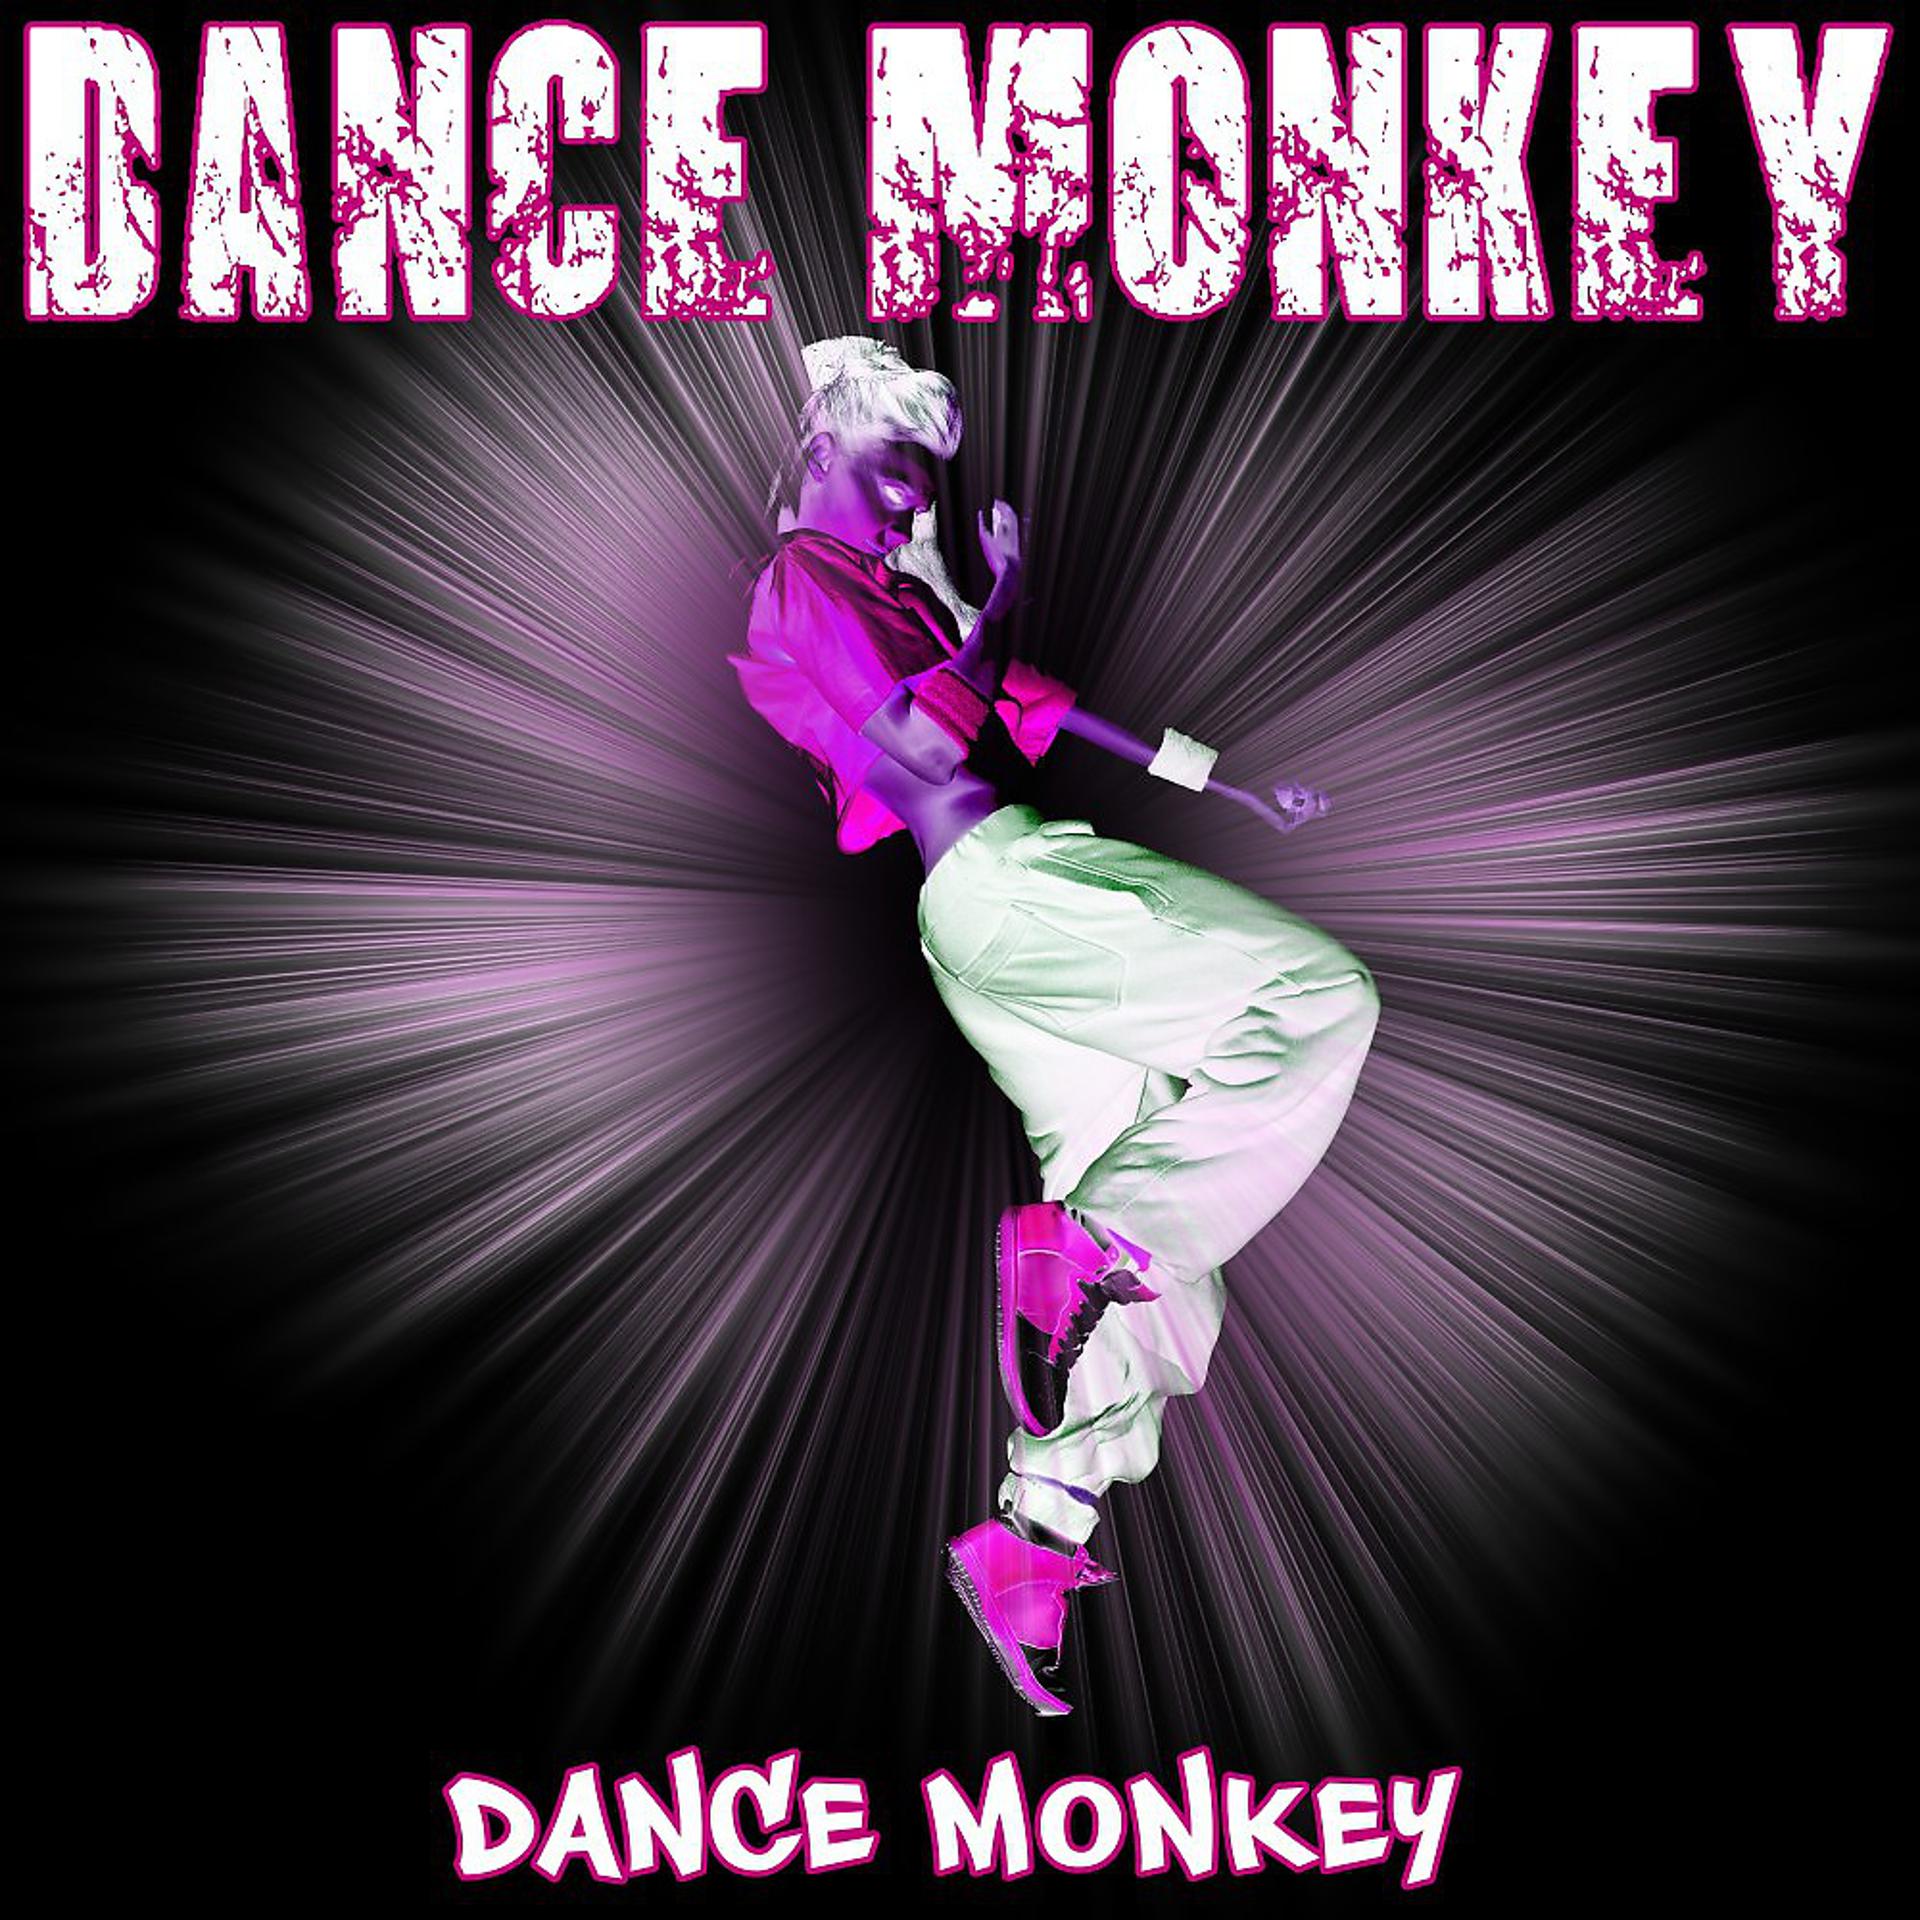 Песню танцуй танцуй данс данс. Данце монкеу. Tones and Dance Monkey исполнитель. Dance Monkey альбом. Манки дэнс дэнс.